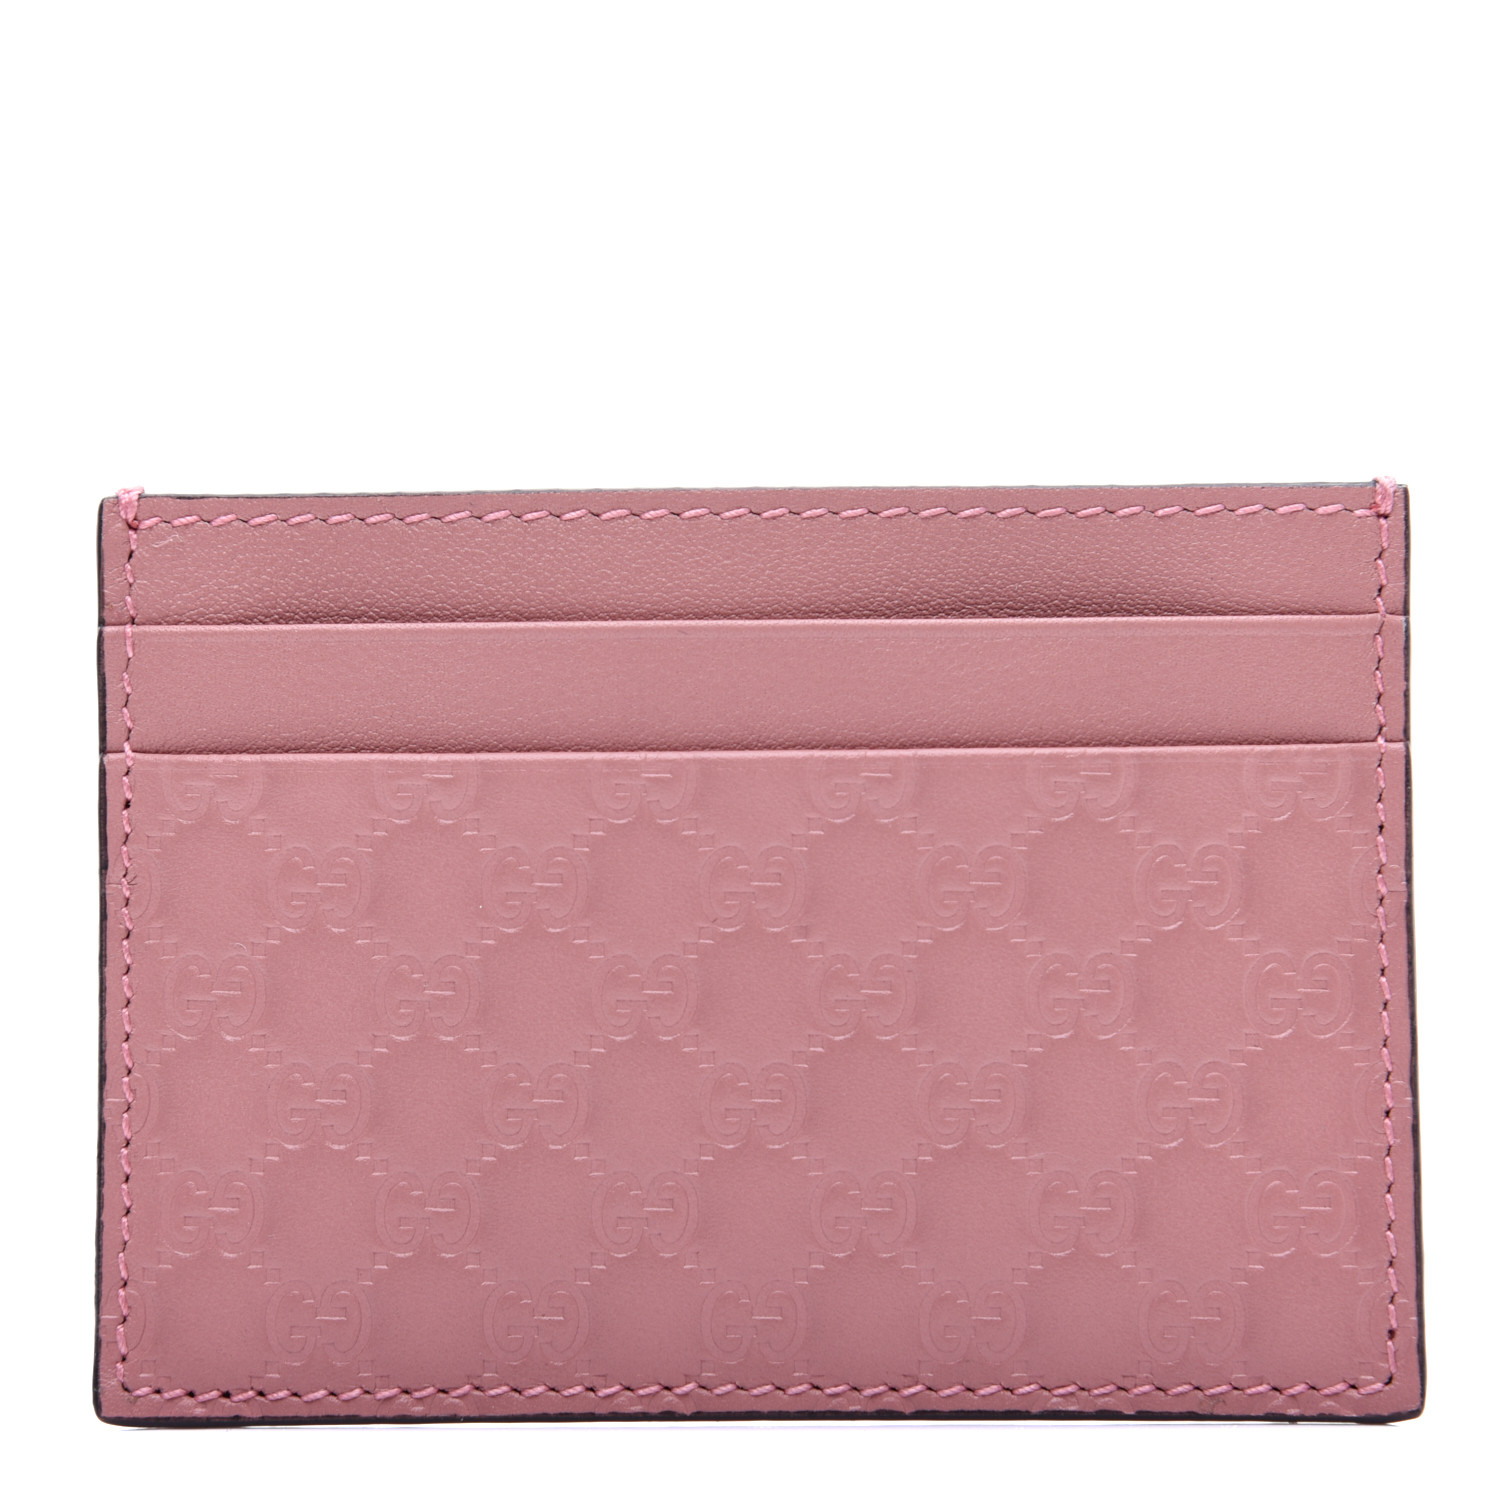 GUCCI Microguccissima Card Holder Soft Pink 720070 | FASHIONPHILE